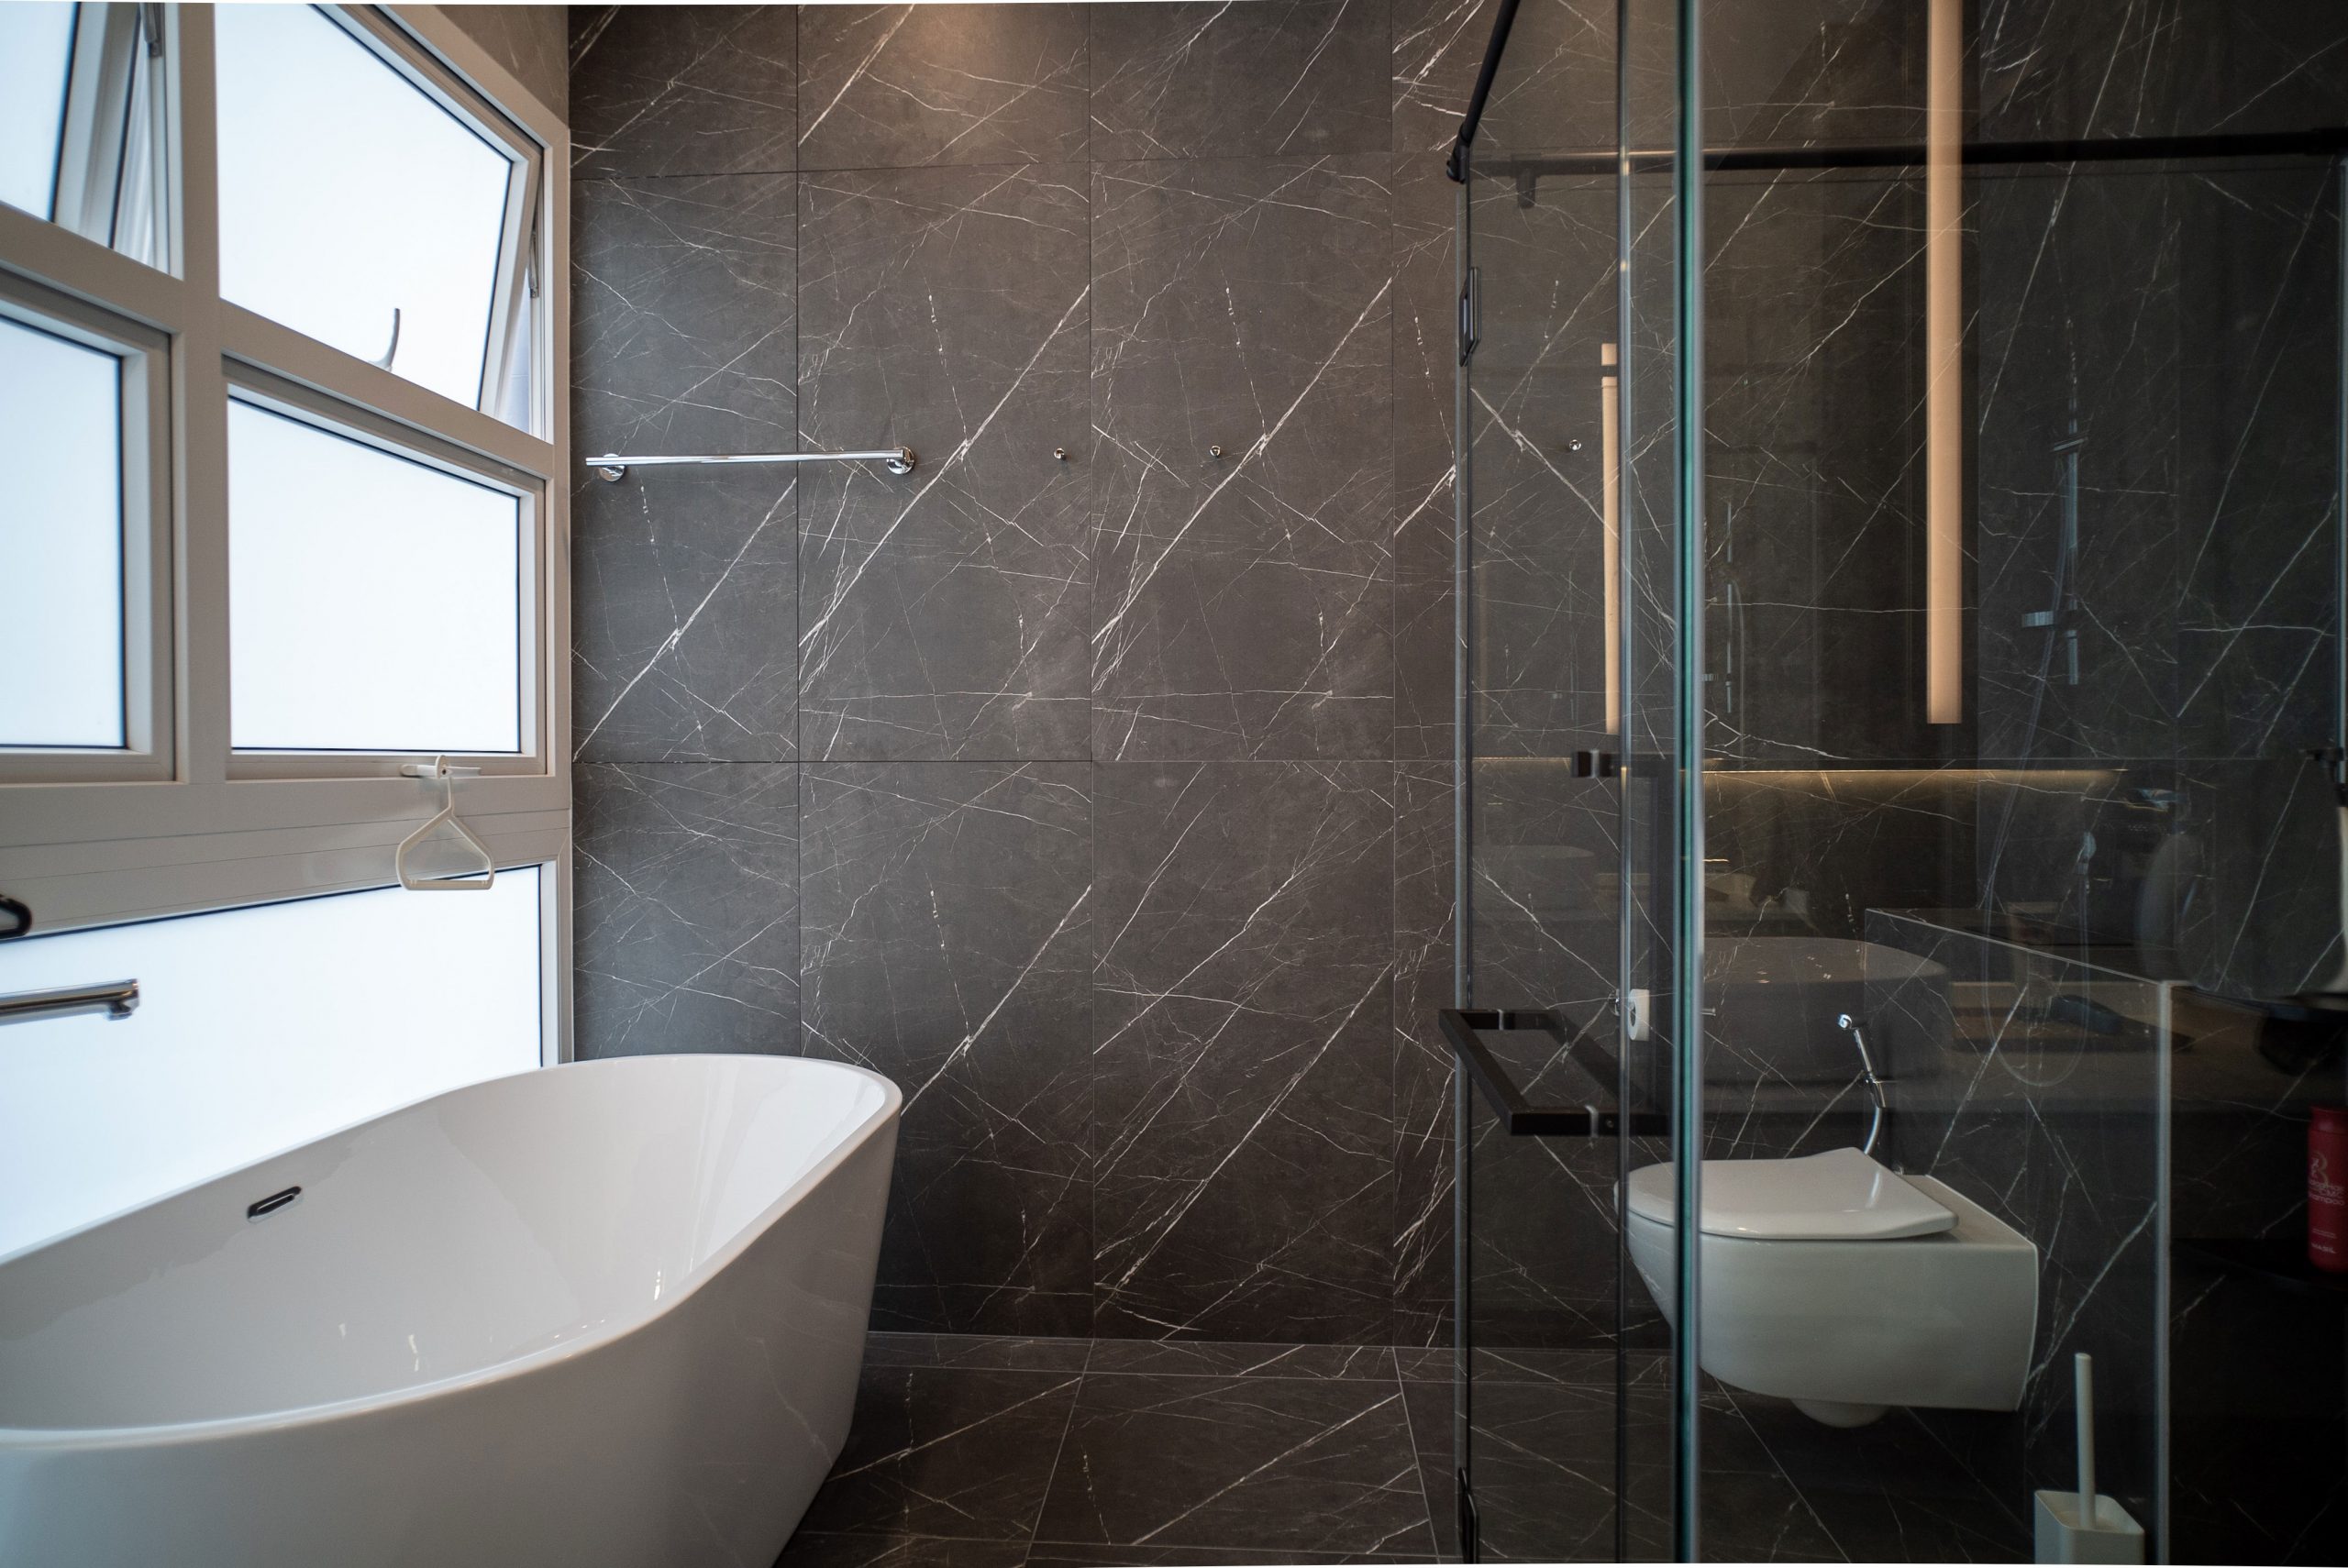 Bath tub and shower stall wc toilet interior design in black marble Minotti inspired interior design